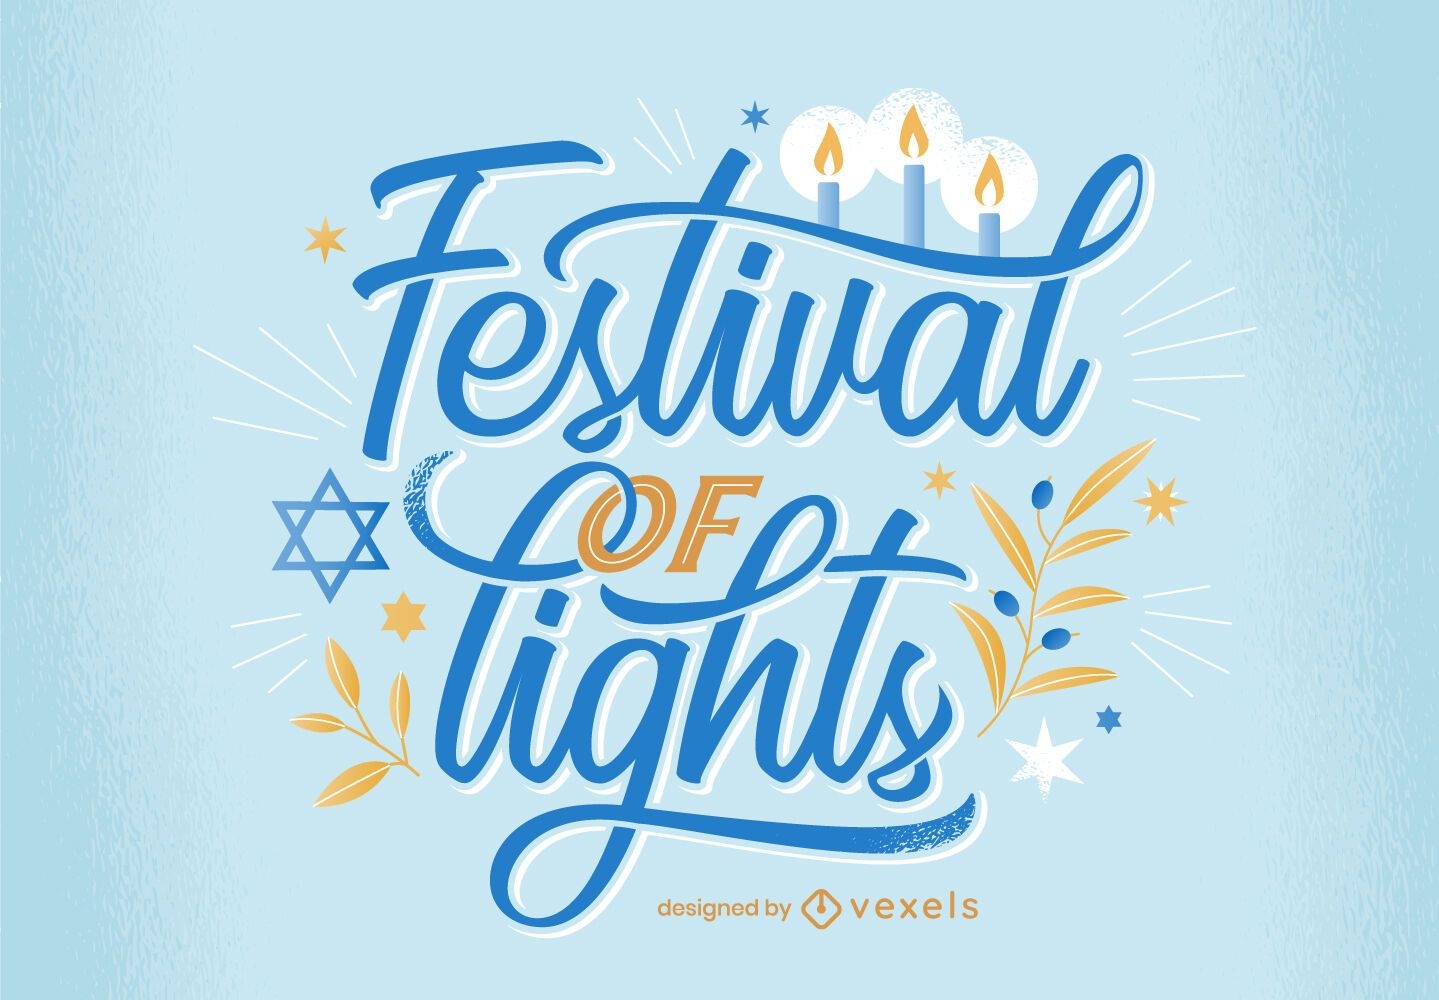 Festival de luzes hanukkah desenho de letras